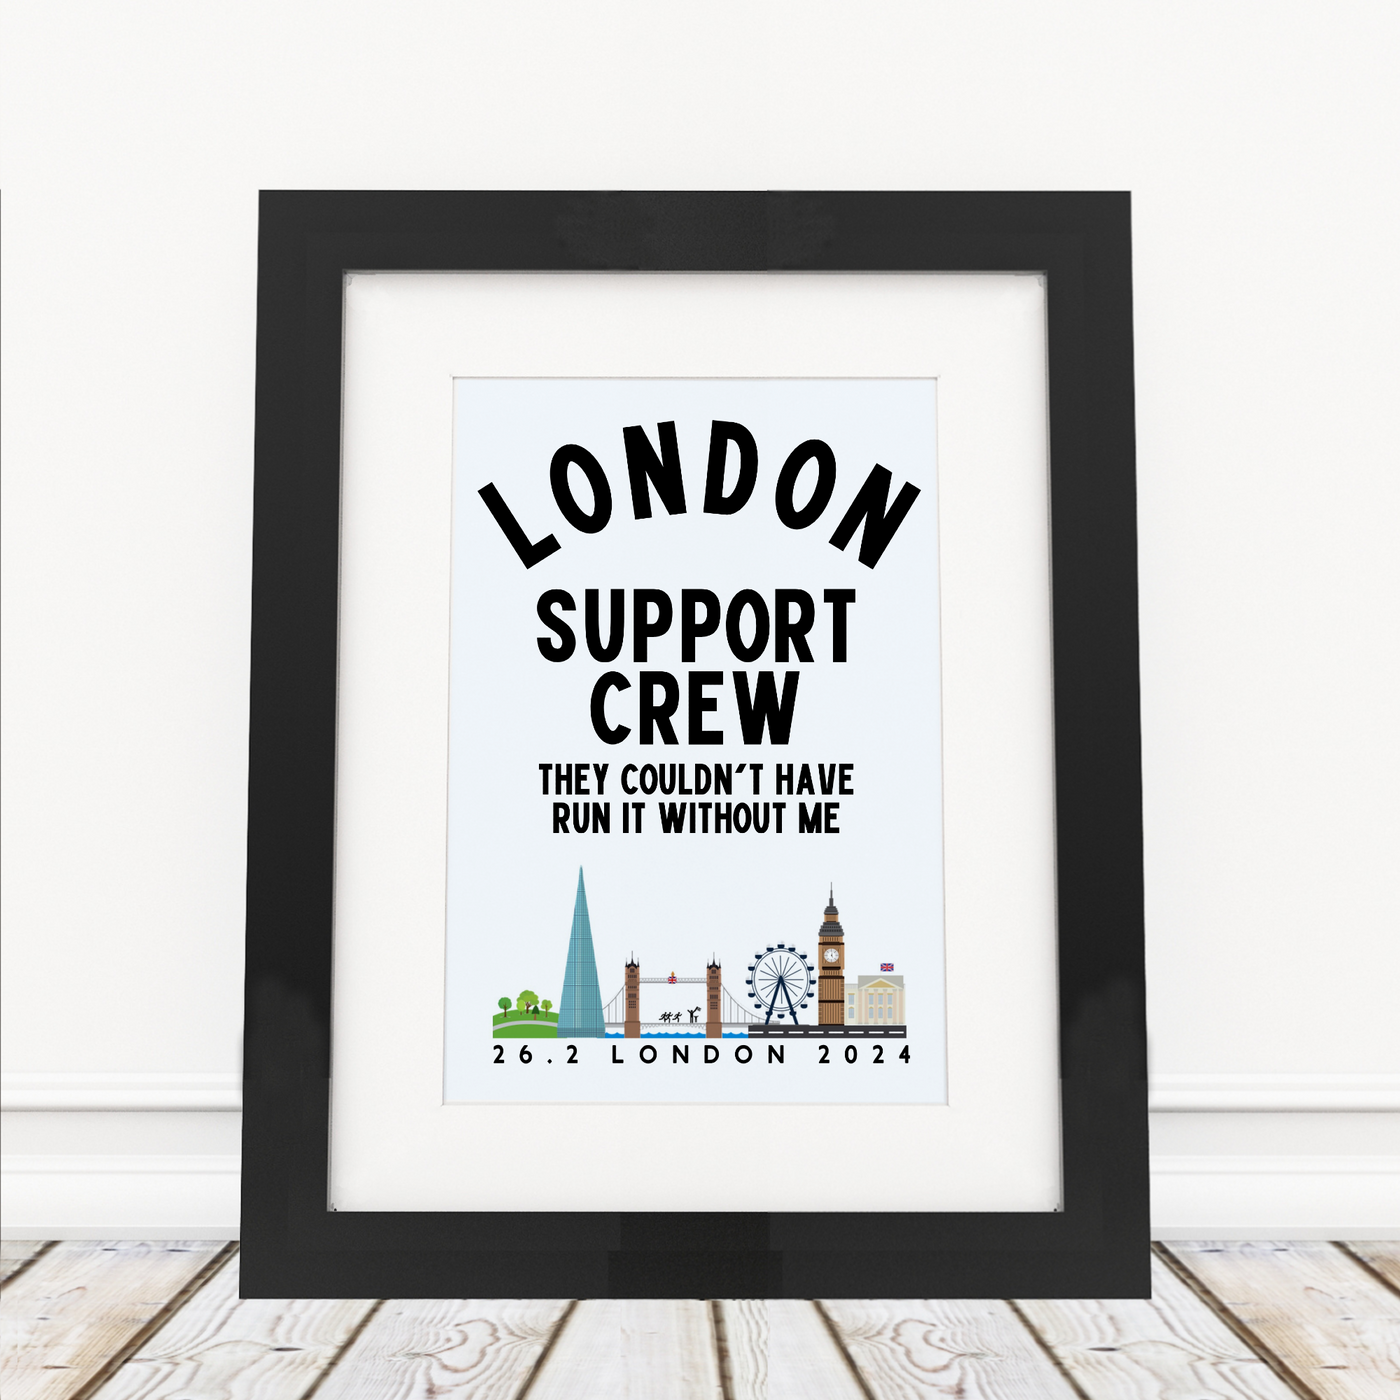 London 2024 - Support Crew - Framed Print